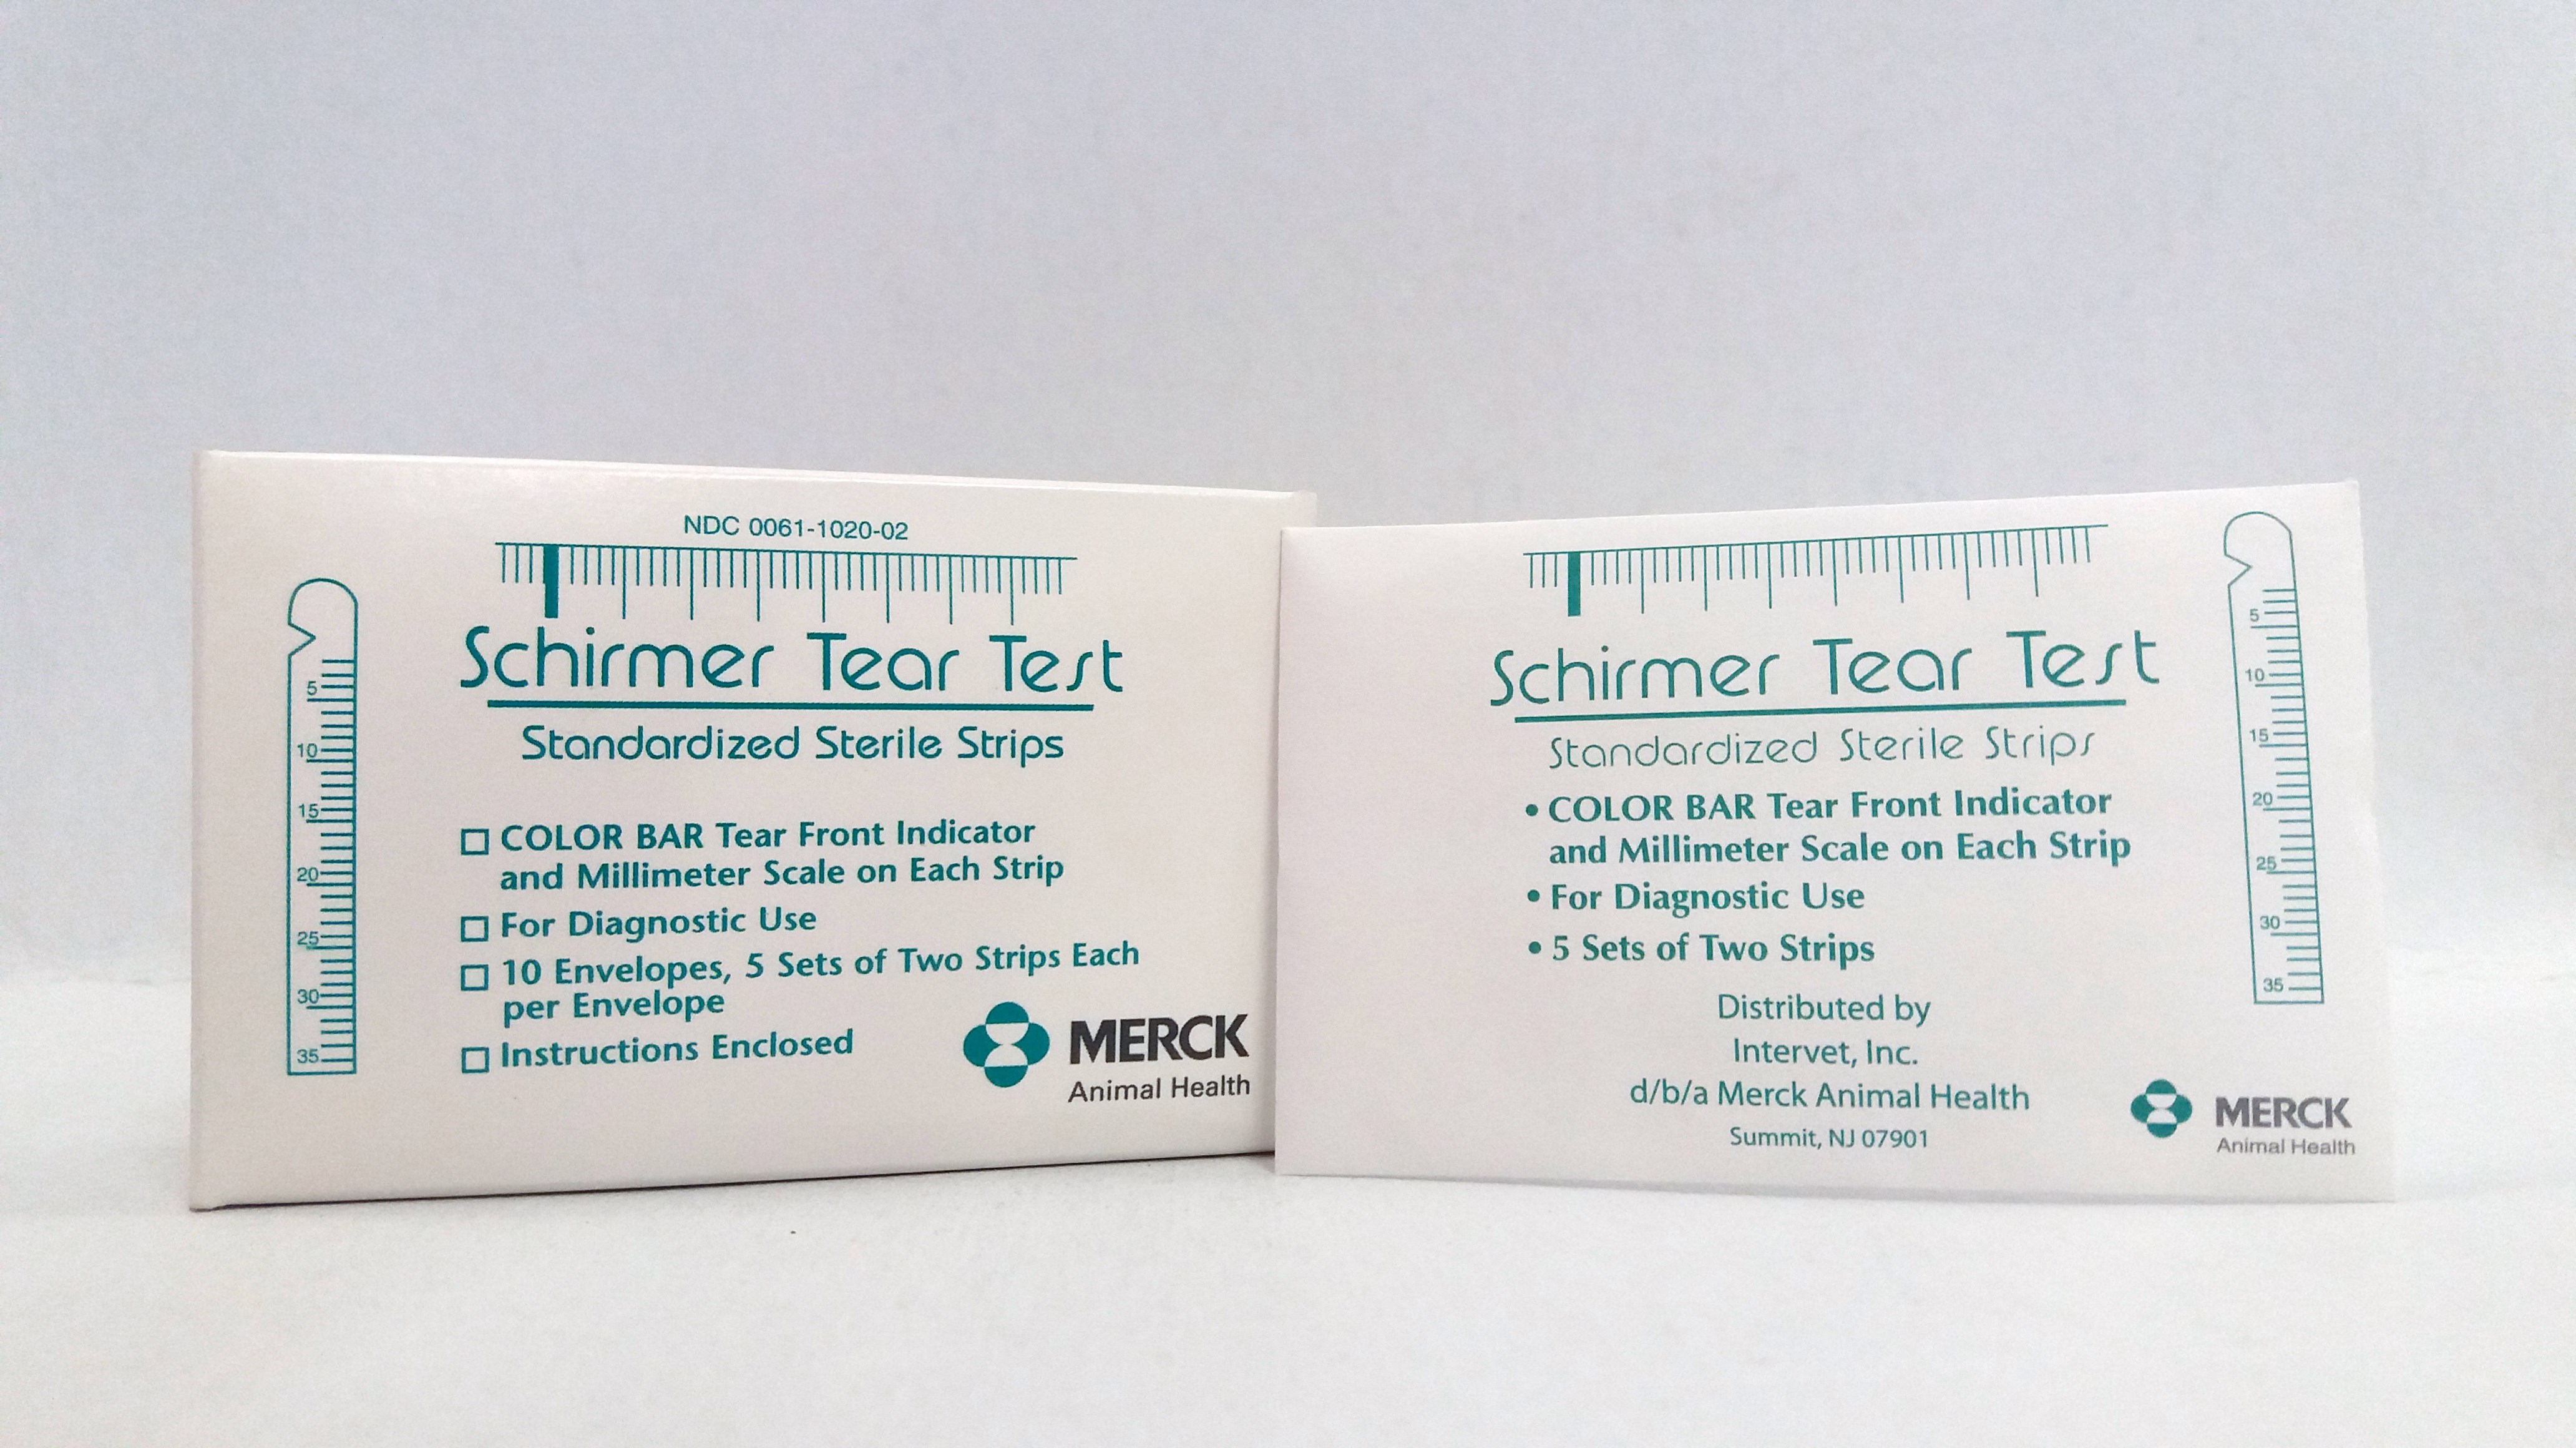 Schirmer tear test, 100 strips